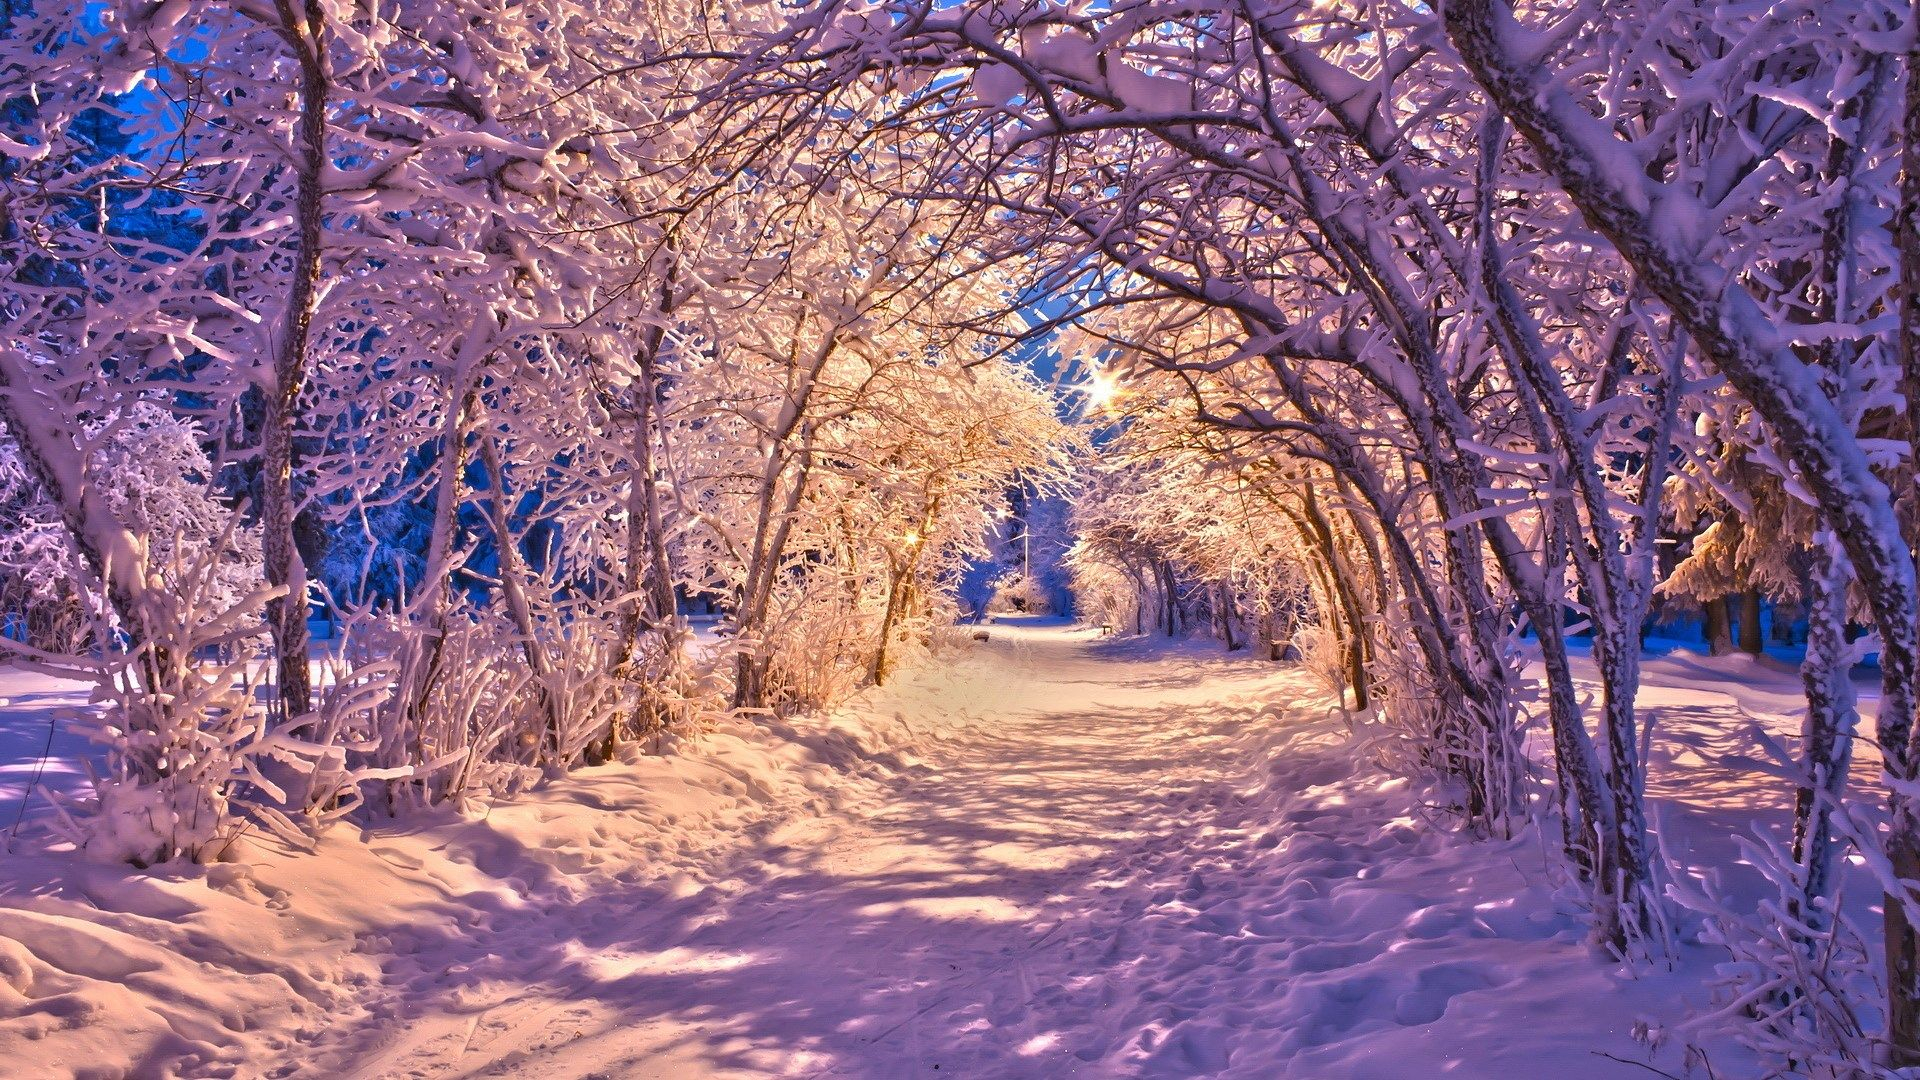 1920x1080 hd nature winter wallpaper backgrounds | Winter landscape, Winter wallpaper, Beautiful winter scenes